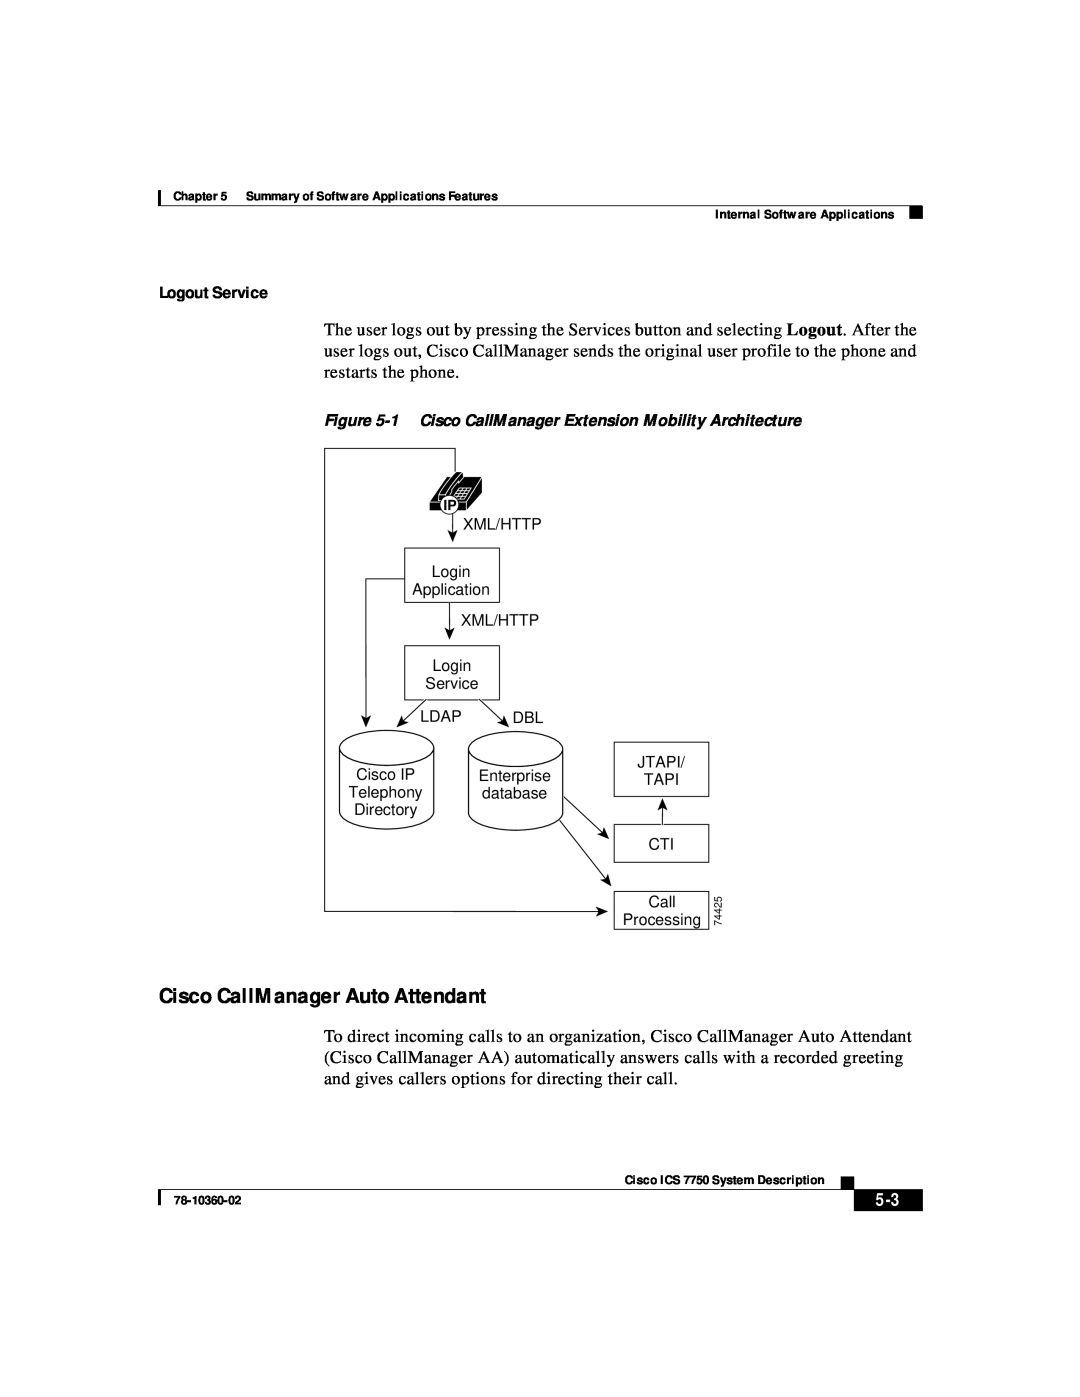 Cisco Systems ICS-7750 manual Cisco CallManager Auto Attendant, Logout Service 